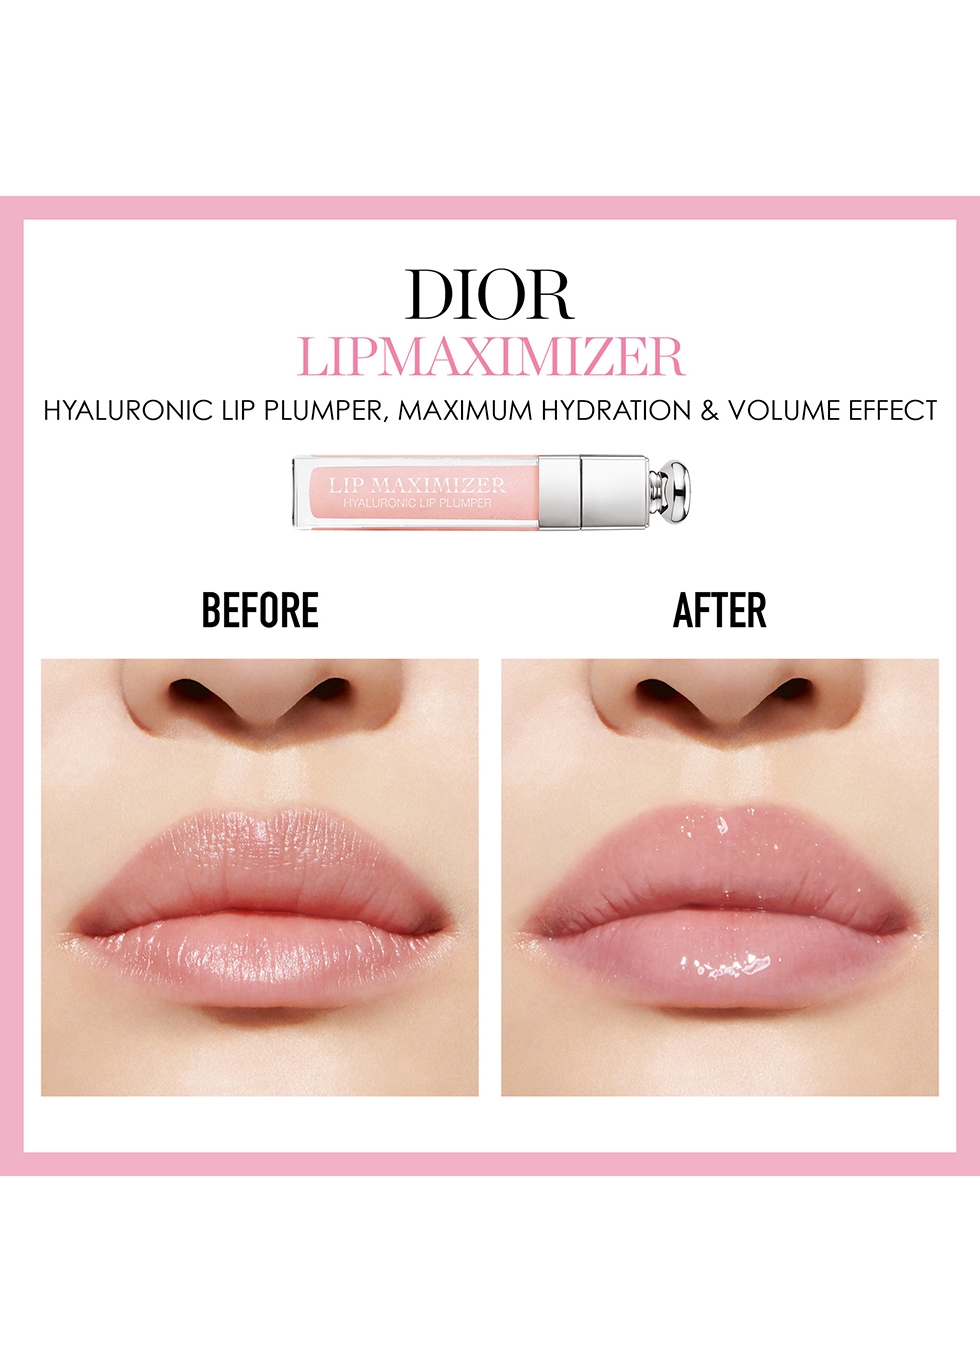 dior addict lip maximizer 001